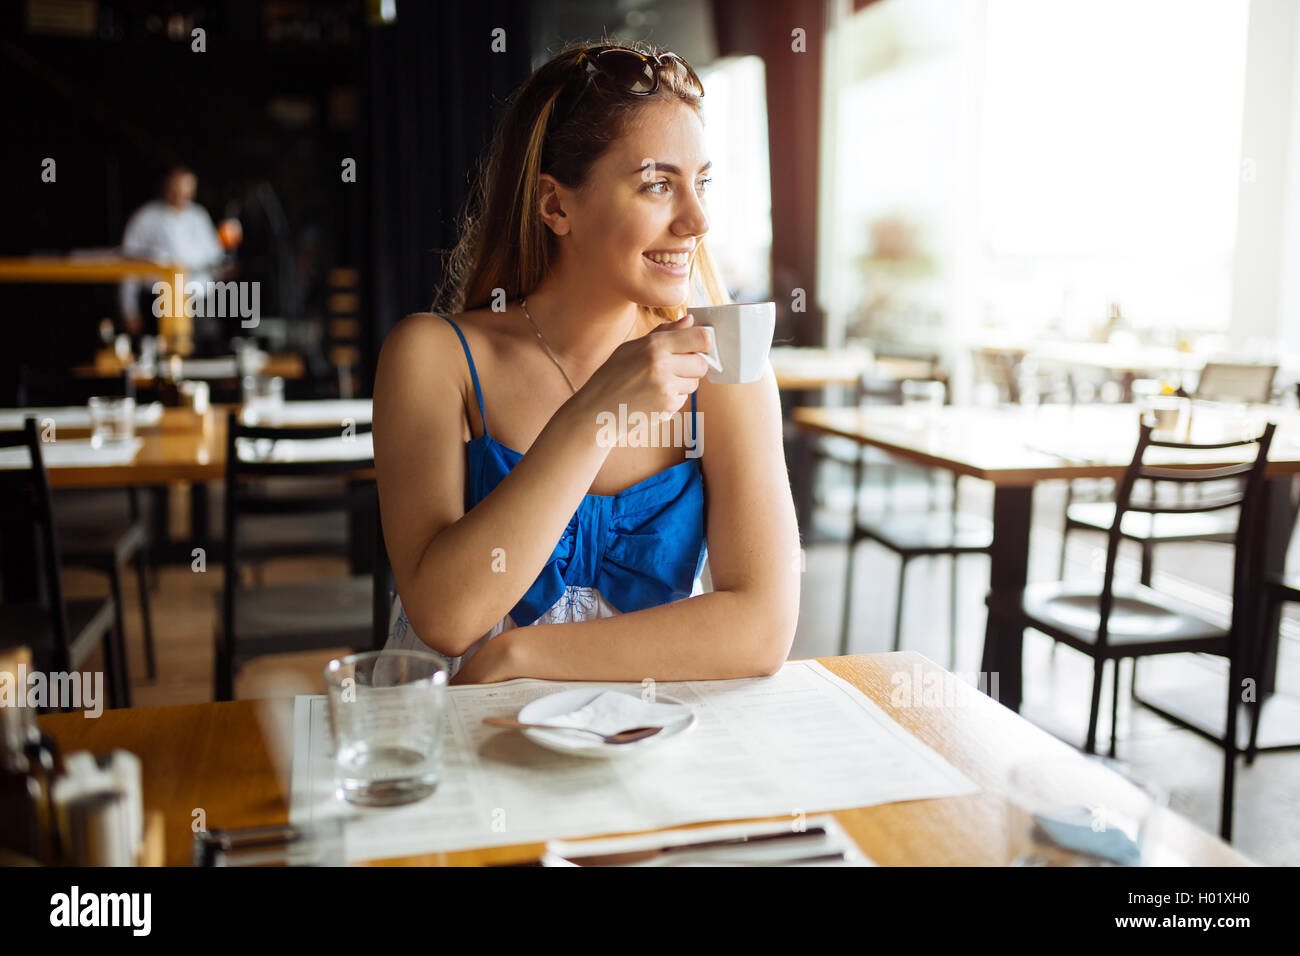 Beautiful woman drinking coffee in restaurant Stock Photo